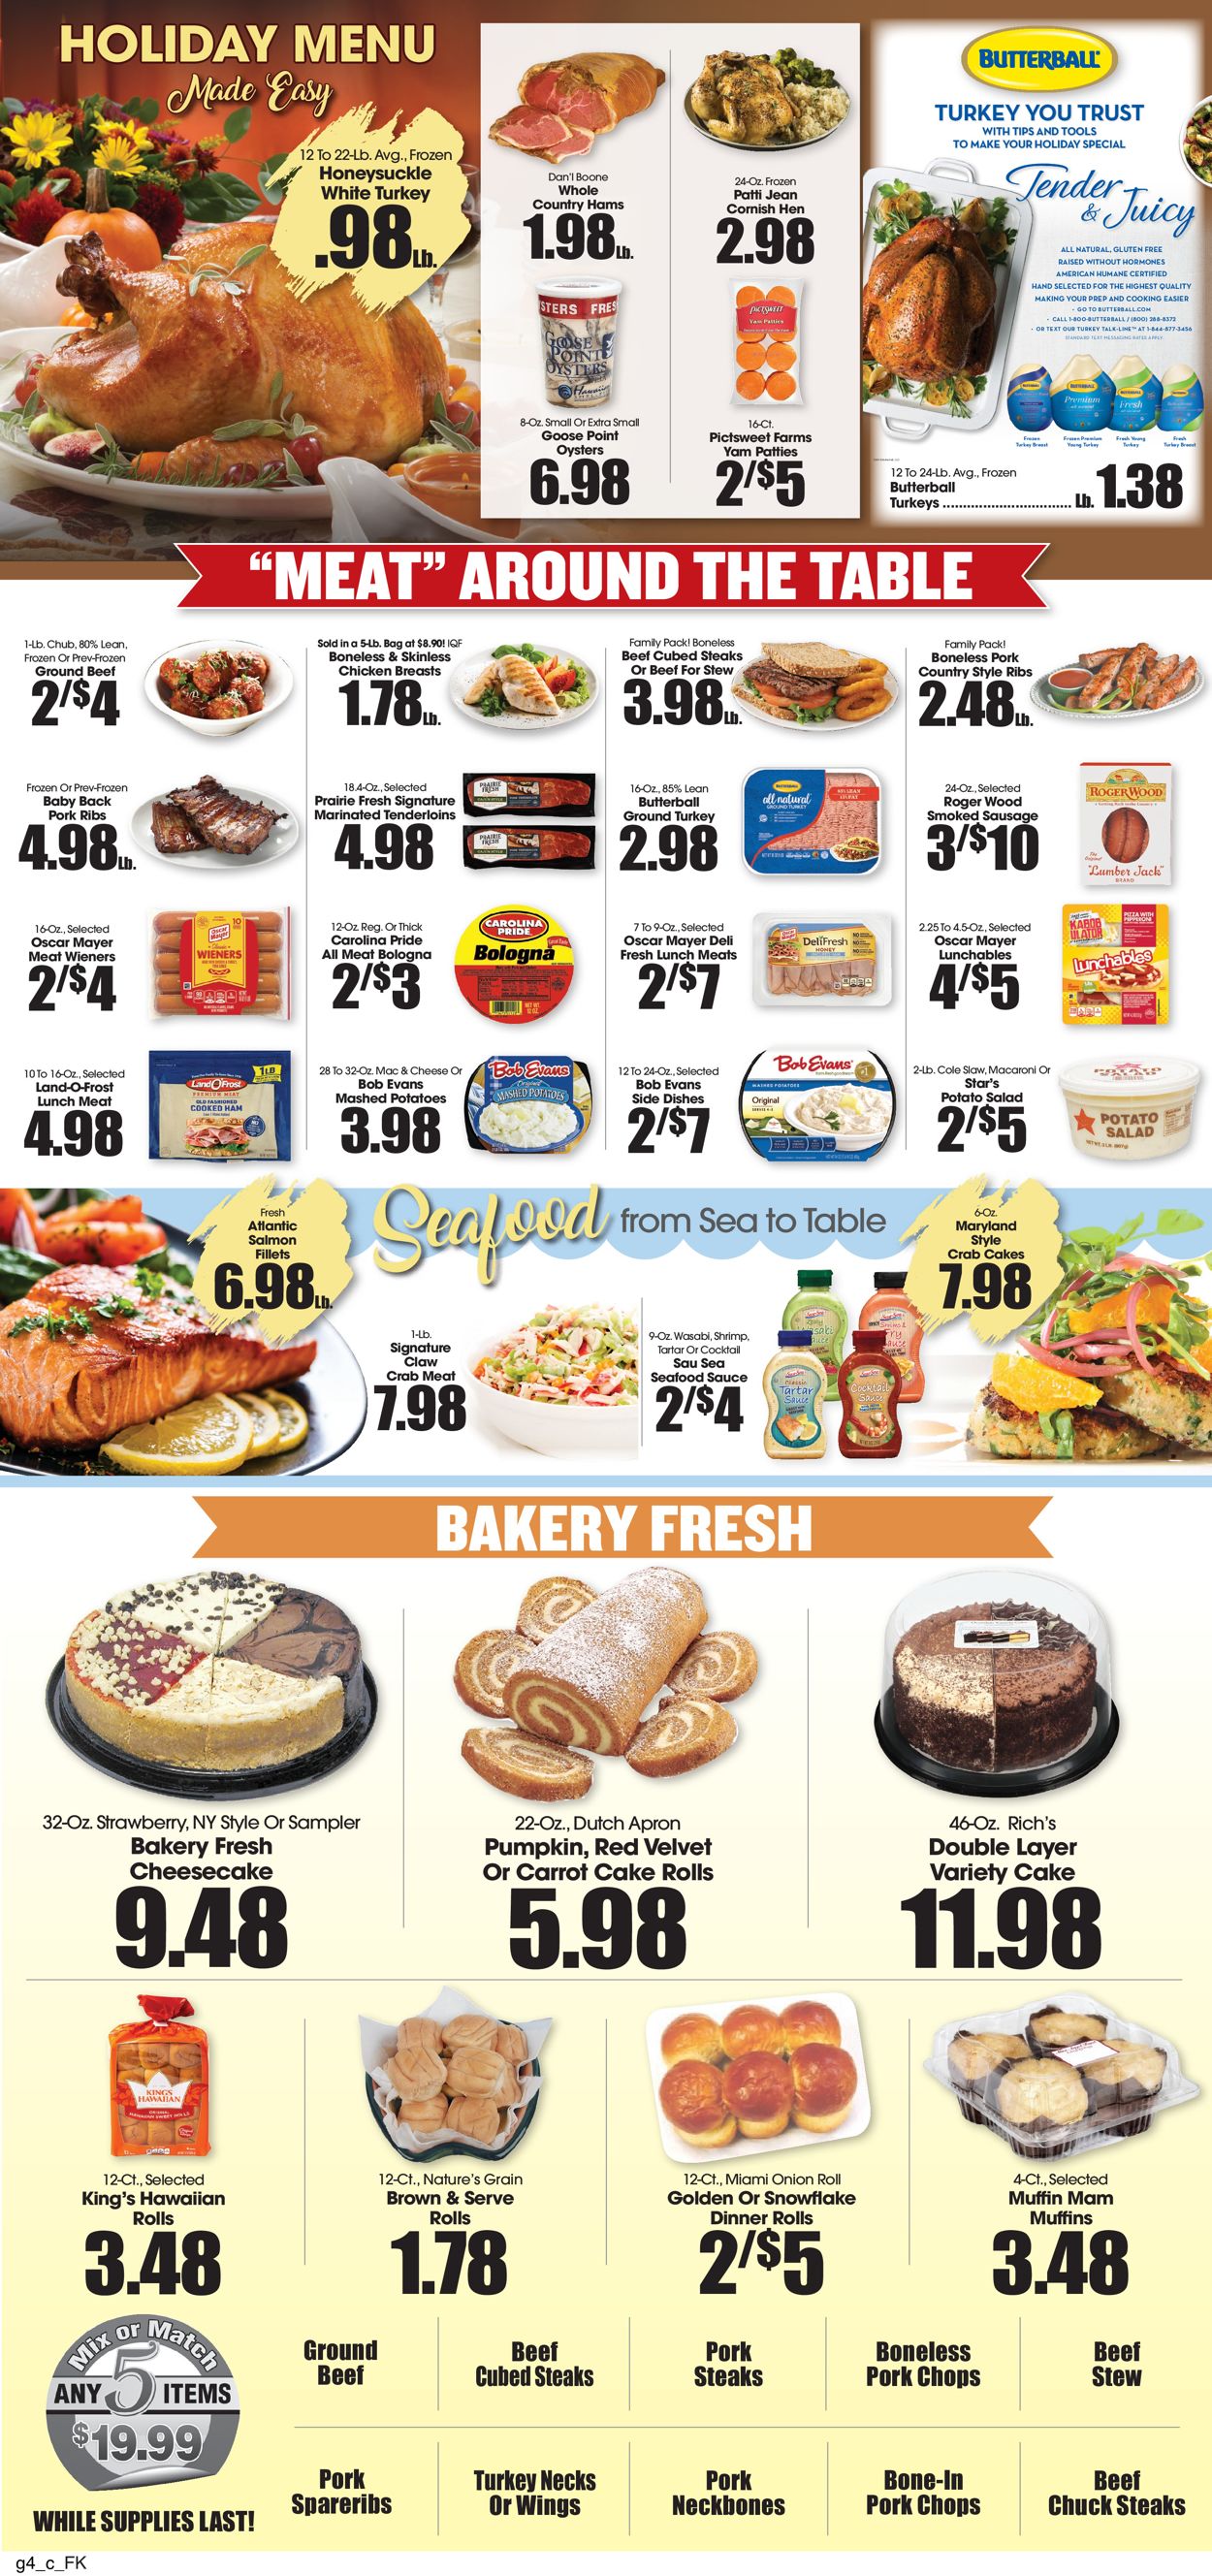 Catalogue Food King Thanksgivig ad 2020 from 11/18/2020